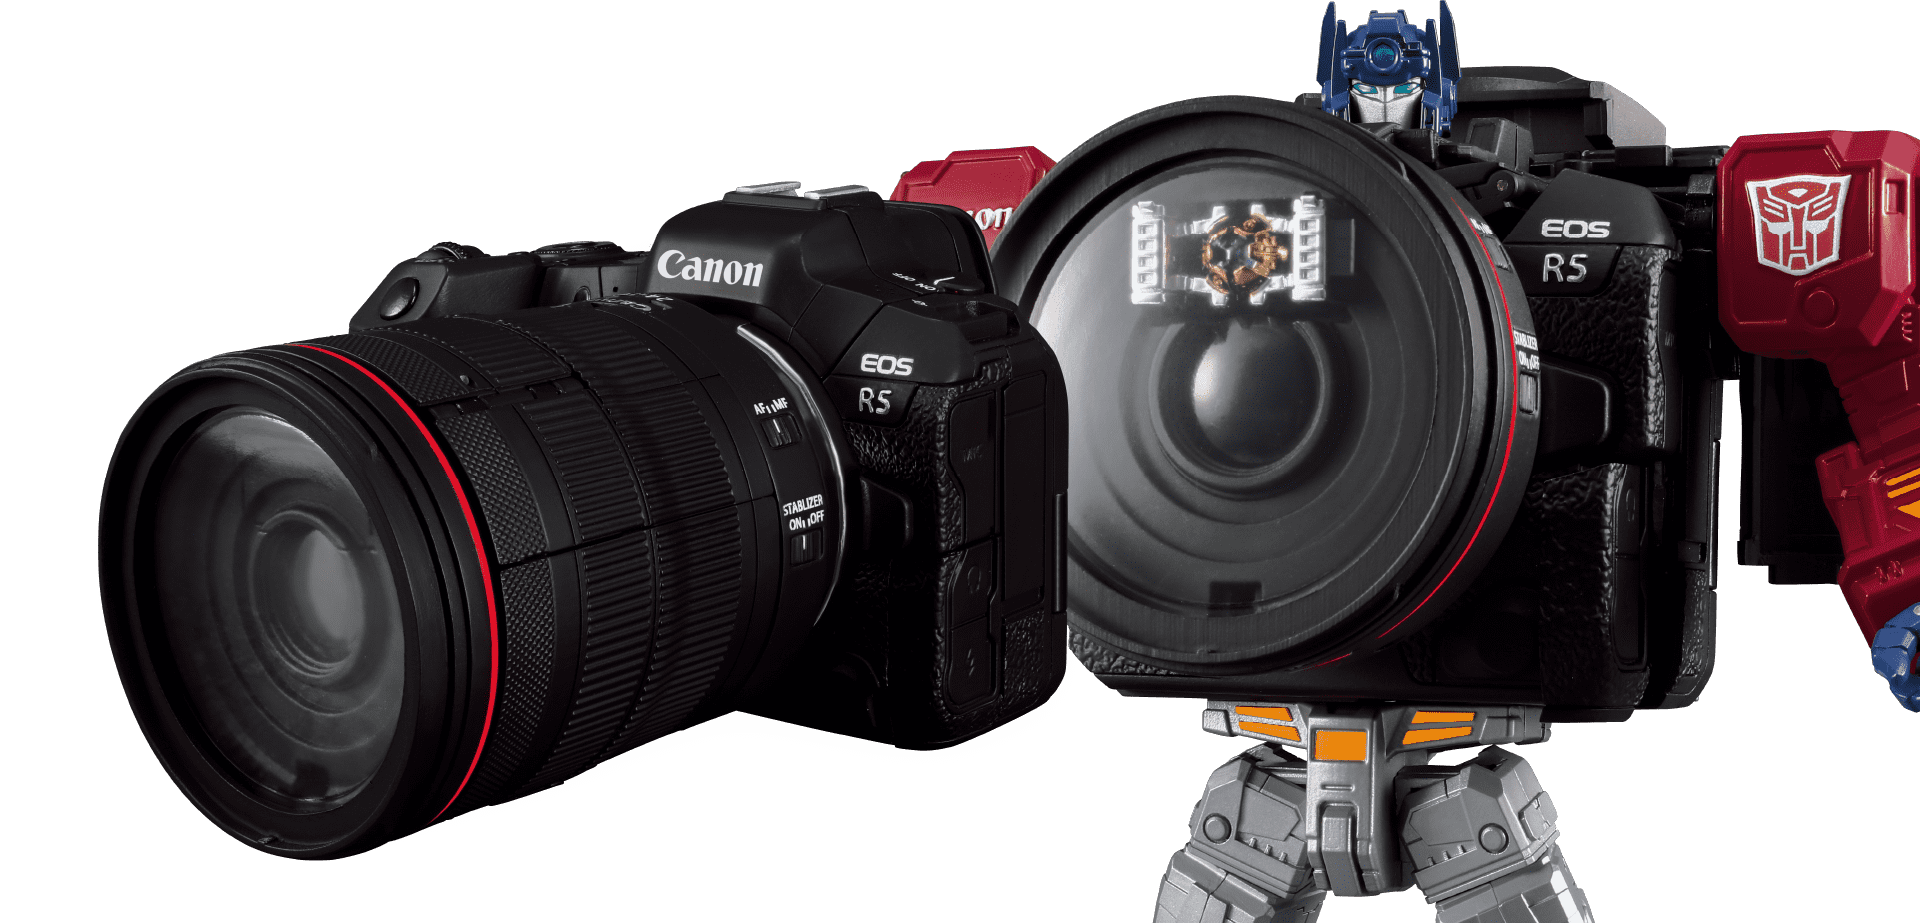 Canon / TRANSFORMERS OPTIMUS PRIME R5｜トランスフォーマー 